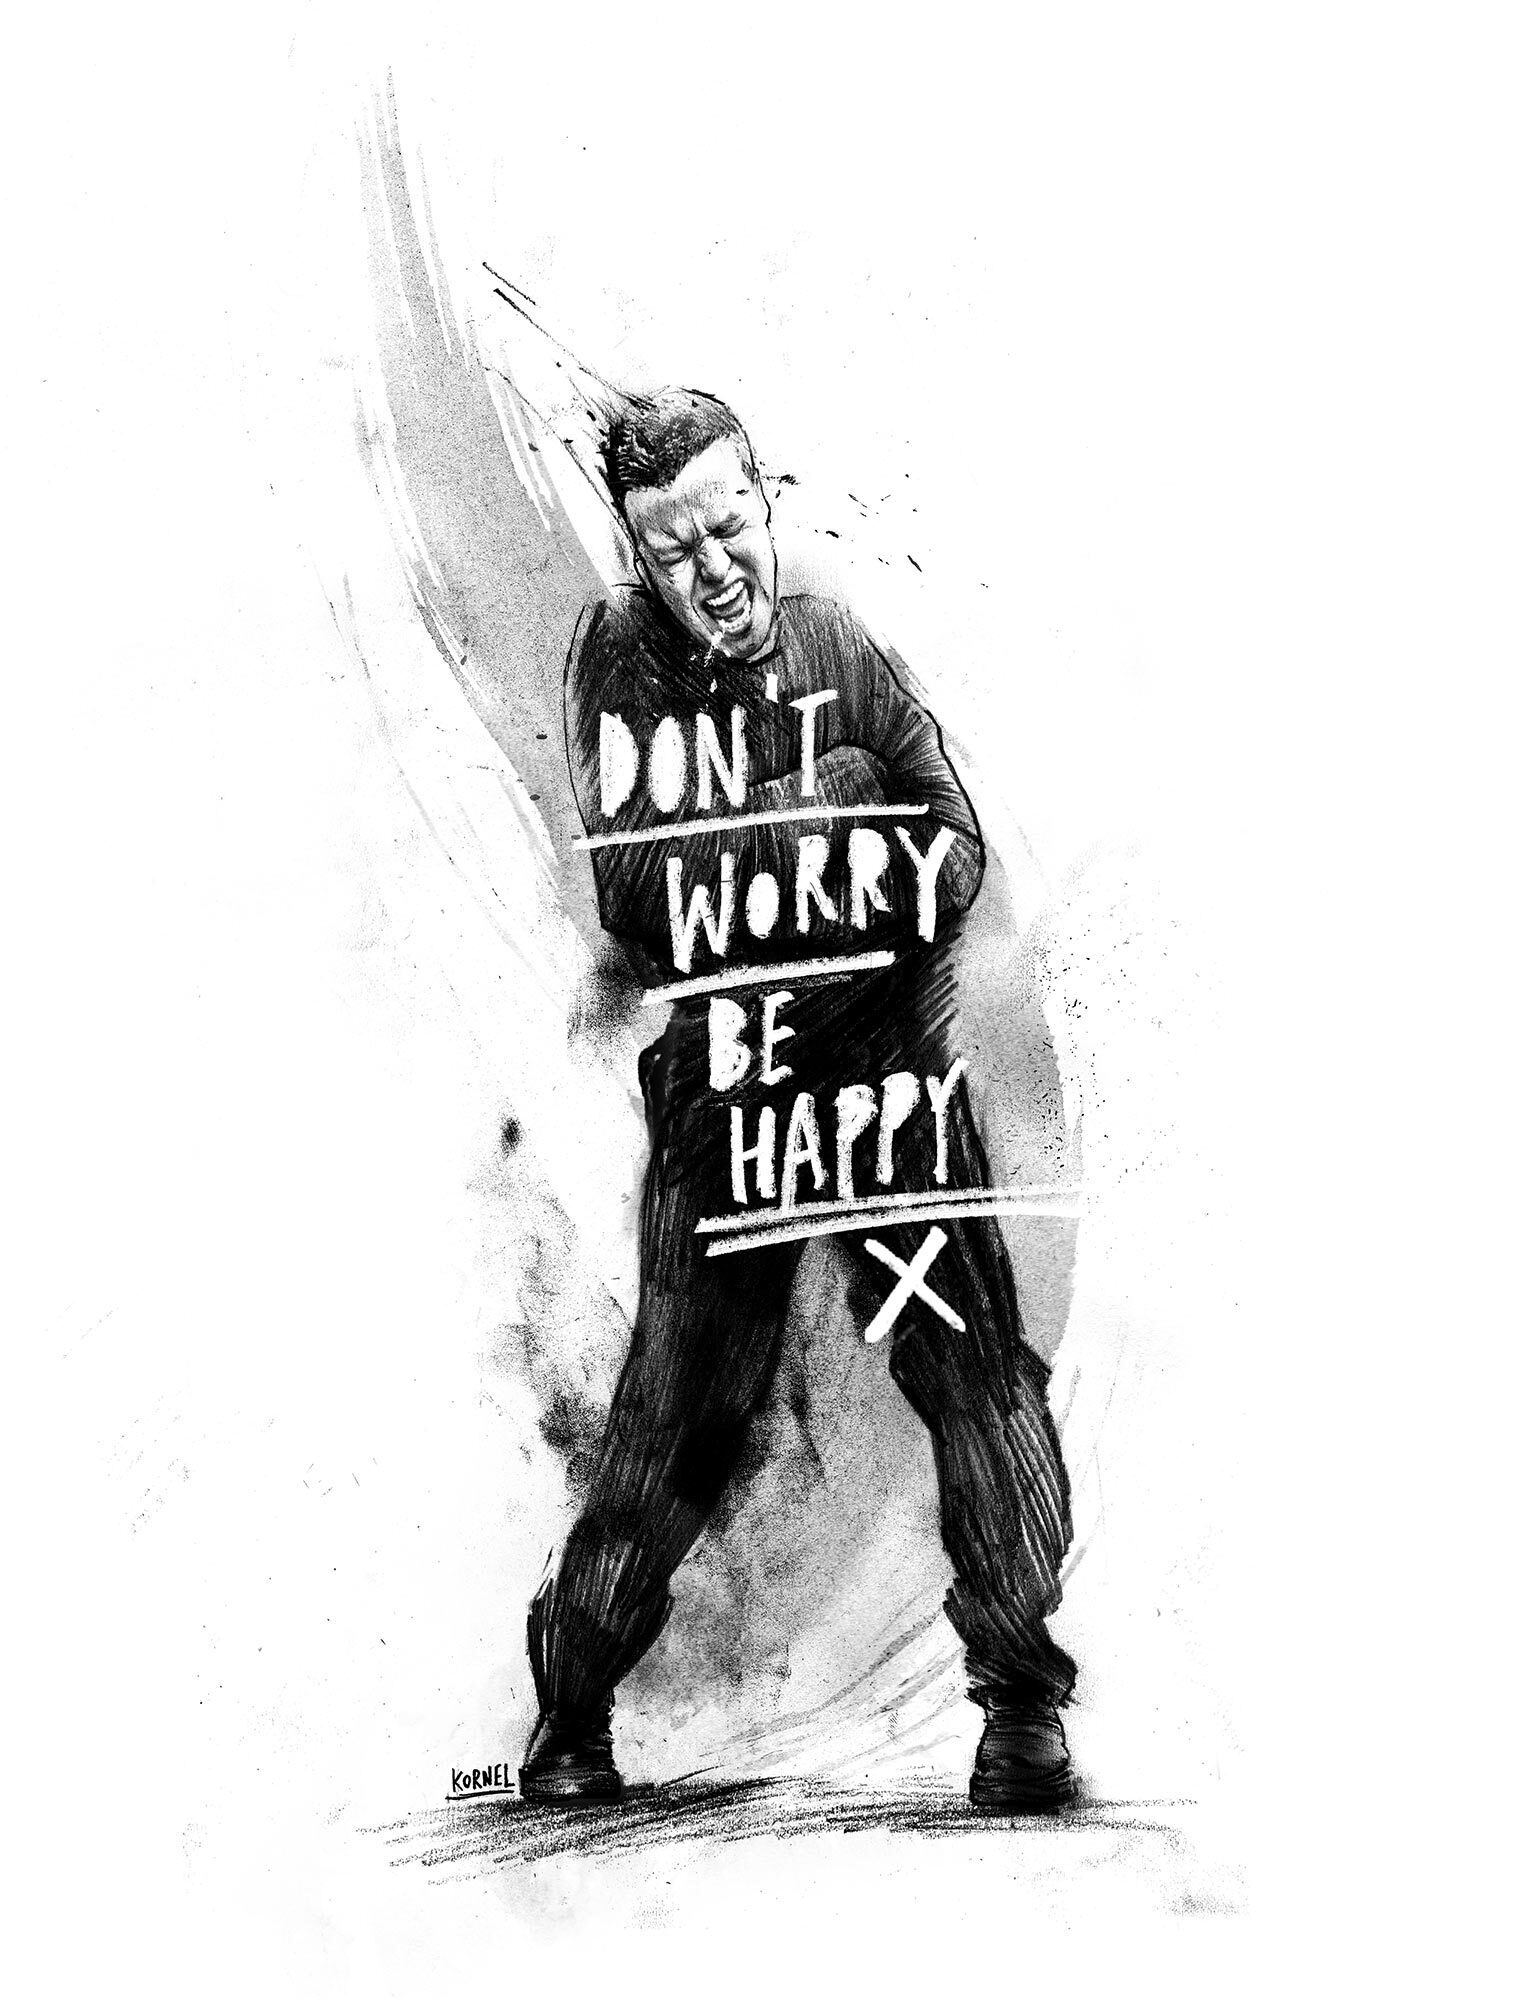 Dont worry be happy illustration - Kornel Illustration | Kornel Stadler portfolio